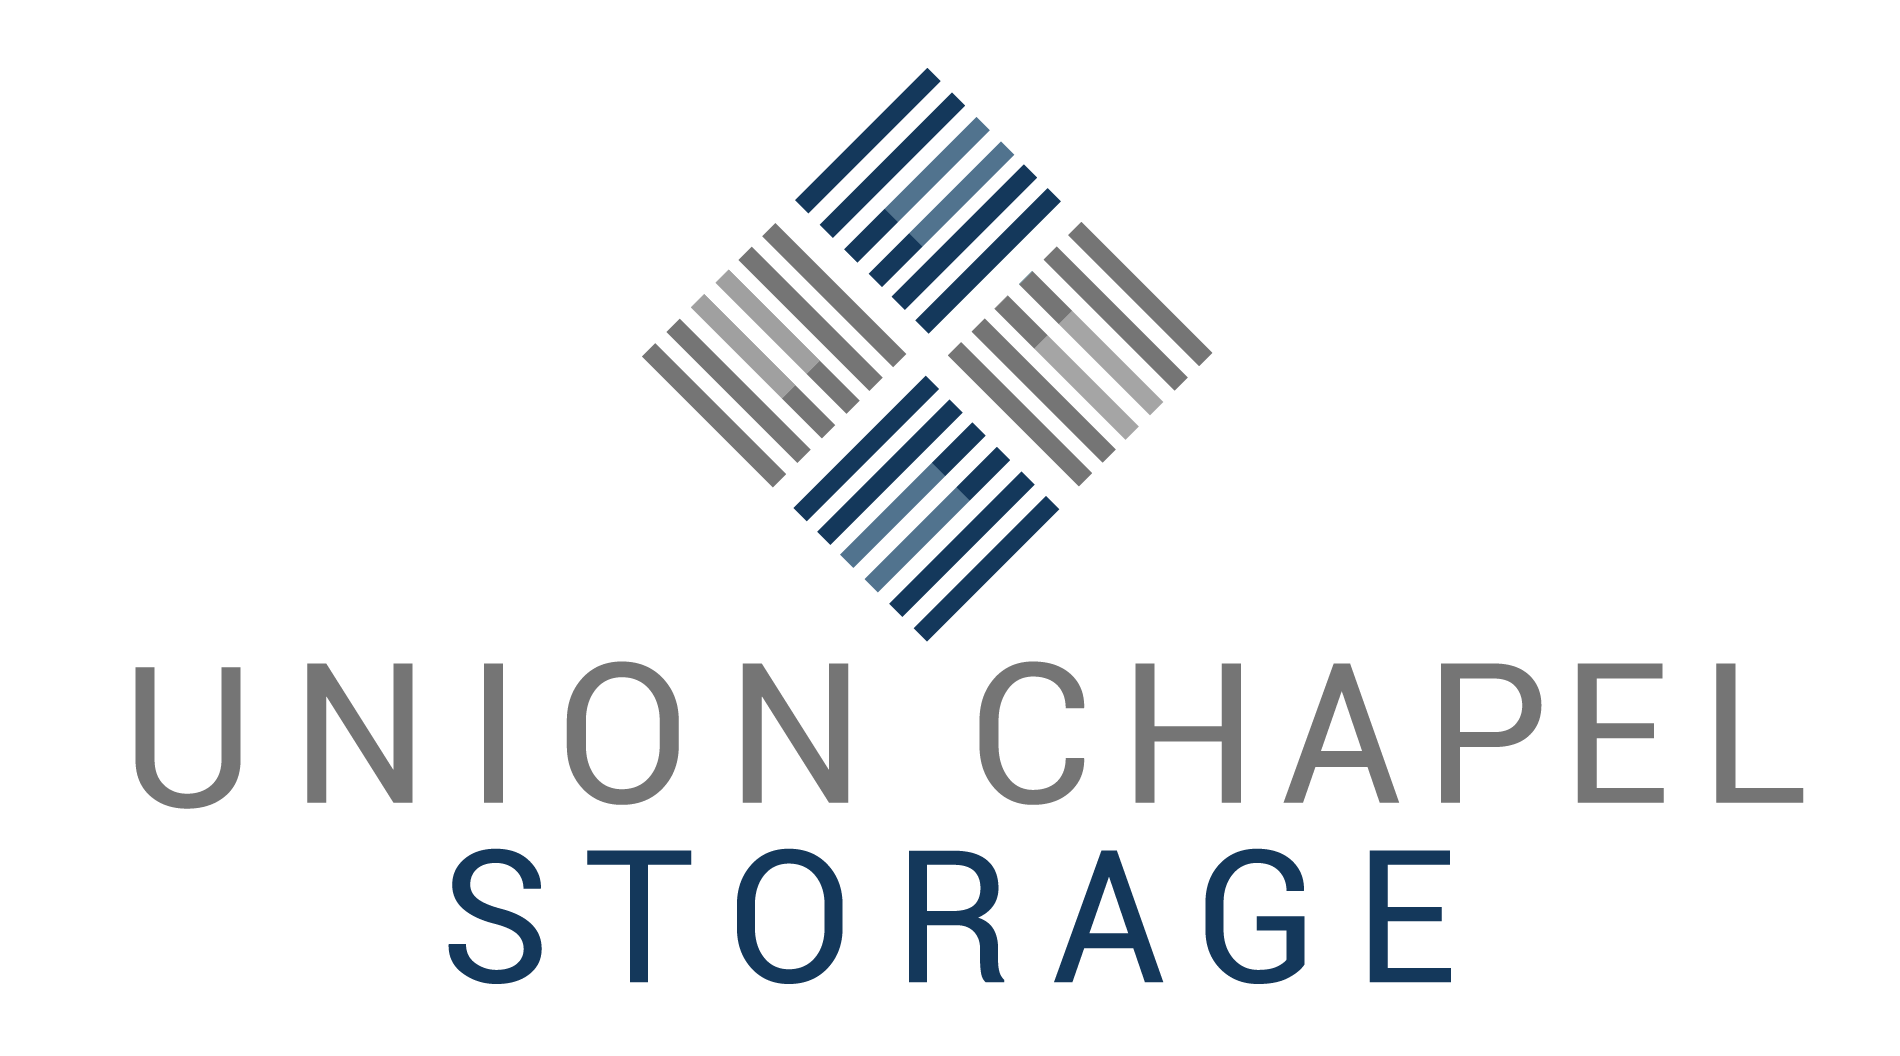 Union Chapel Storage